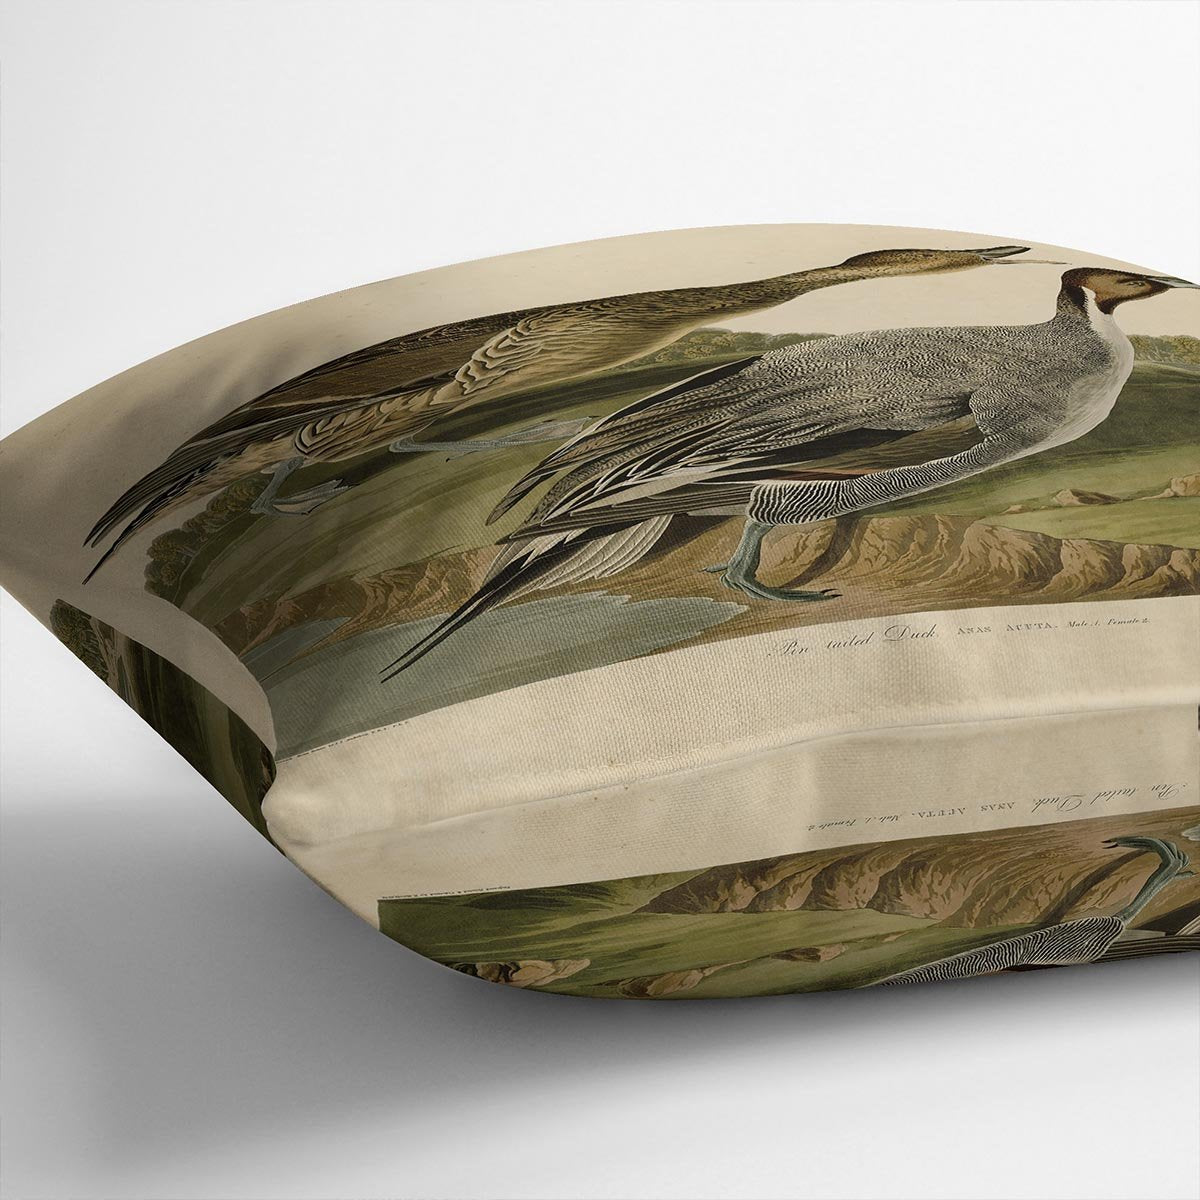 Pin tailed Duck by Audubon Cushion